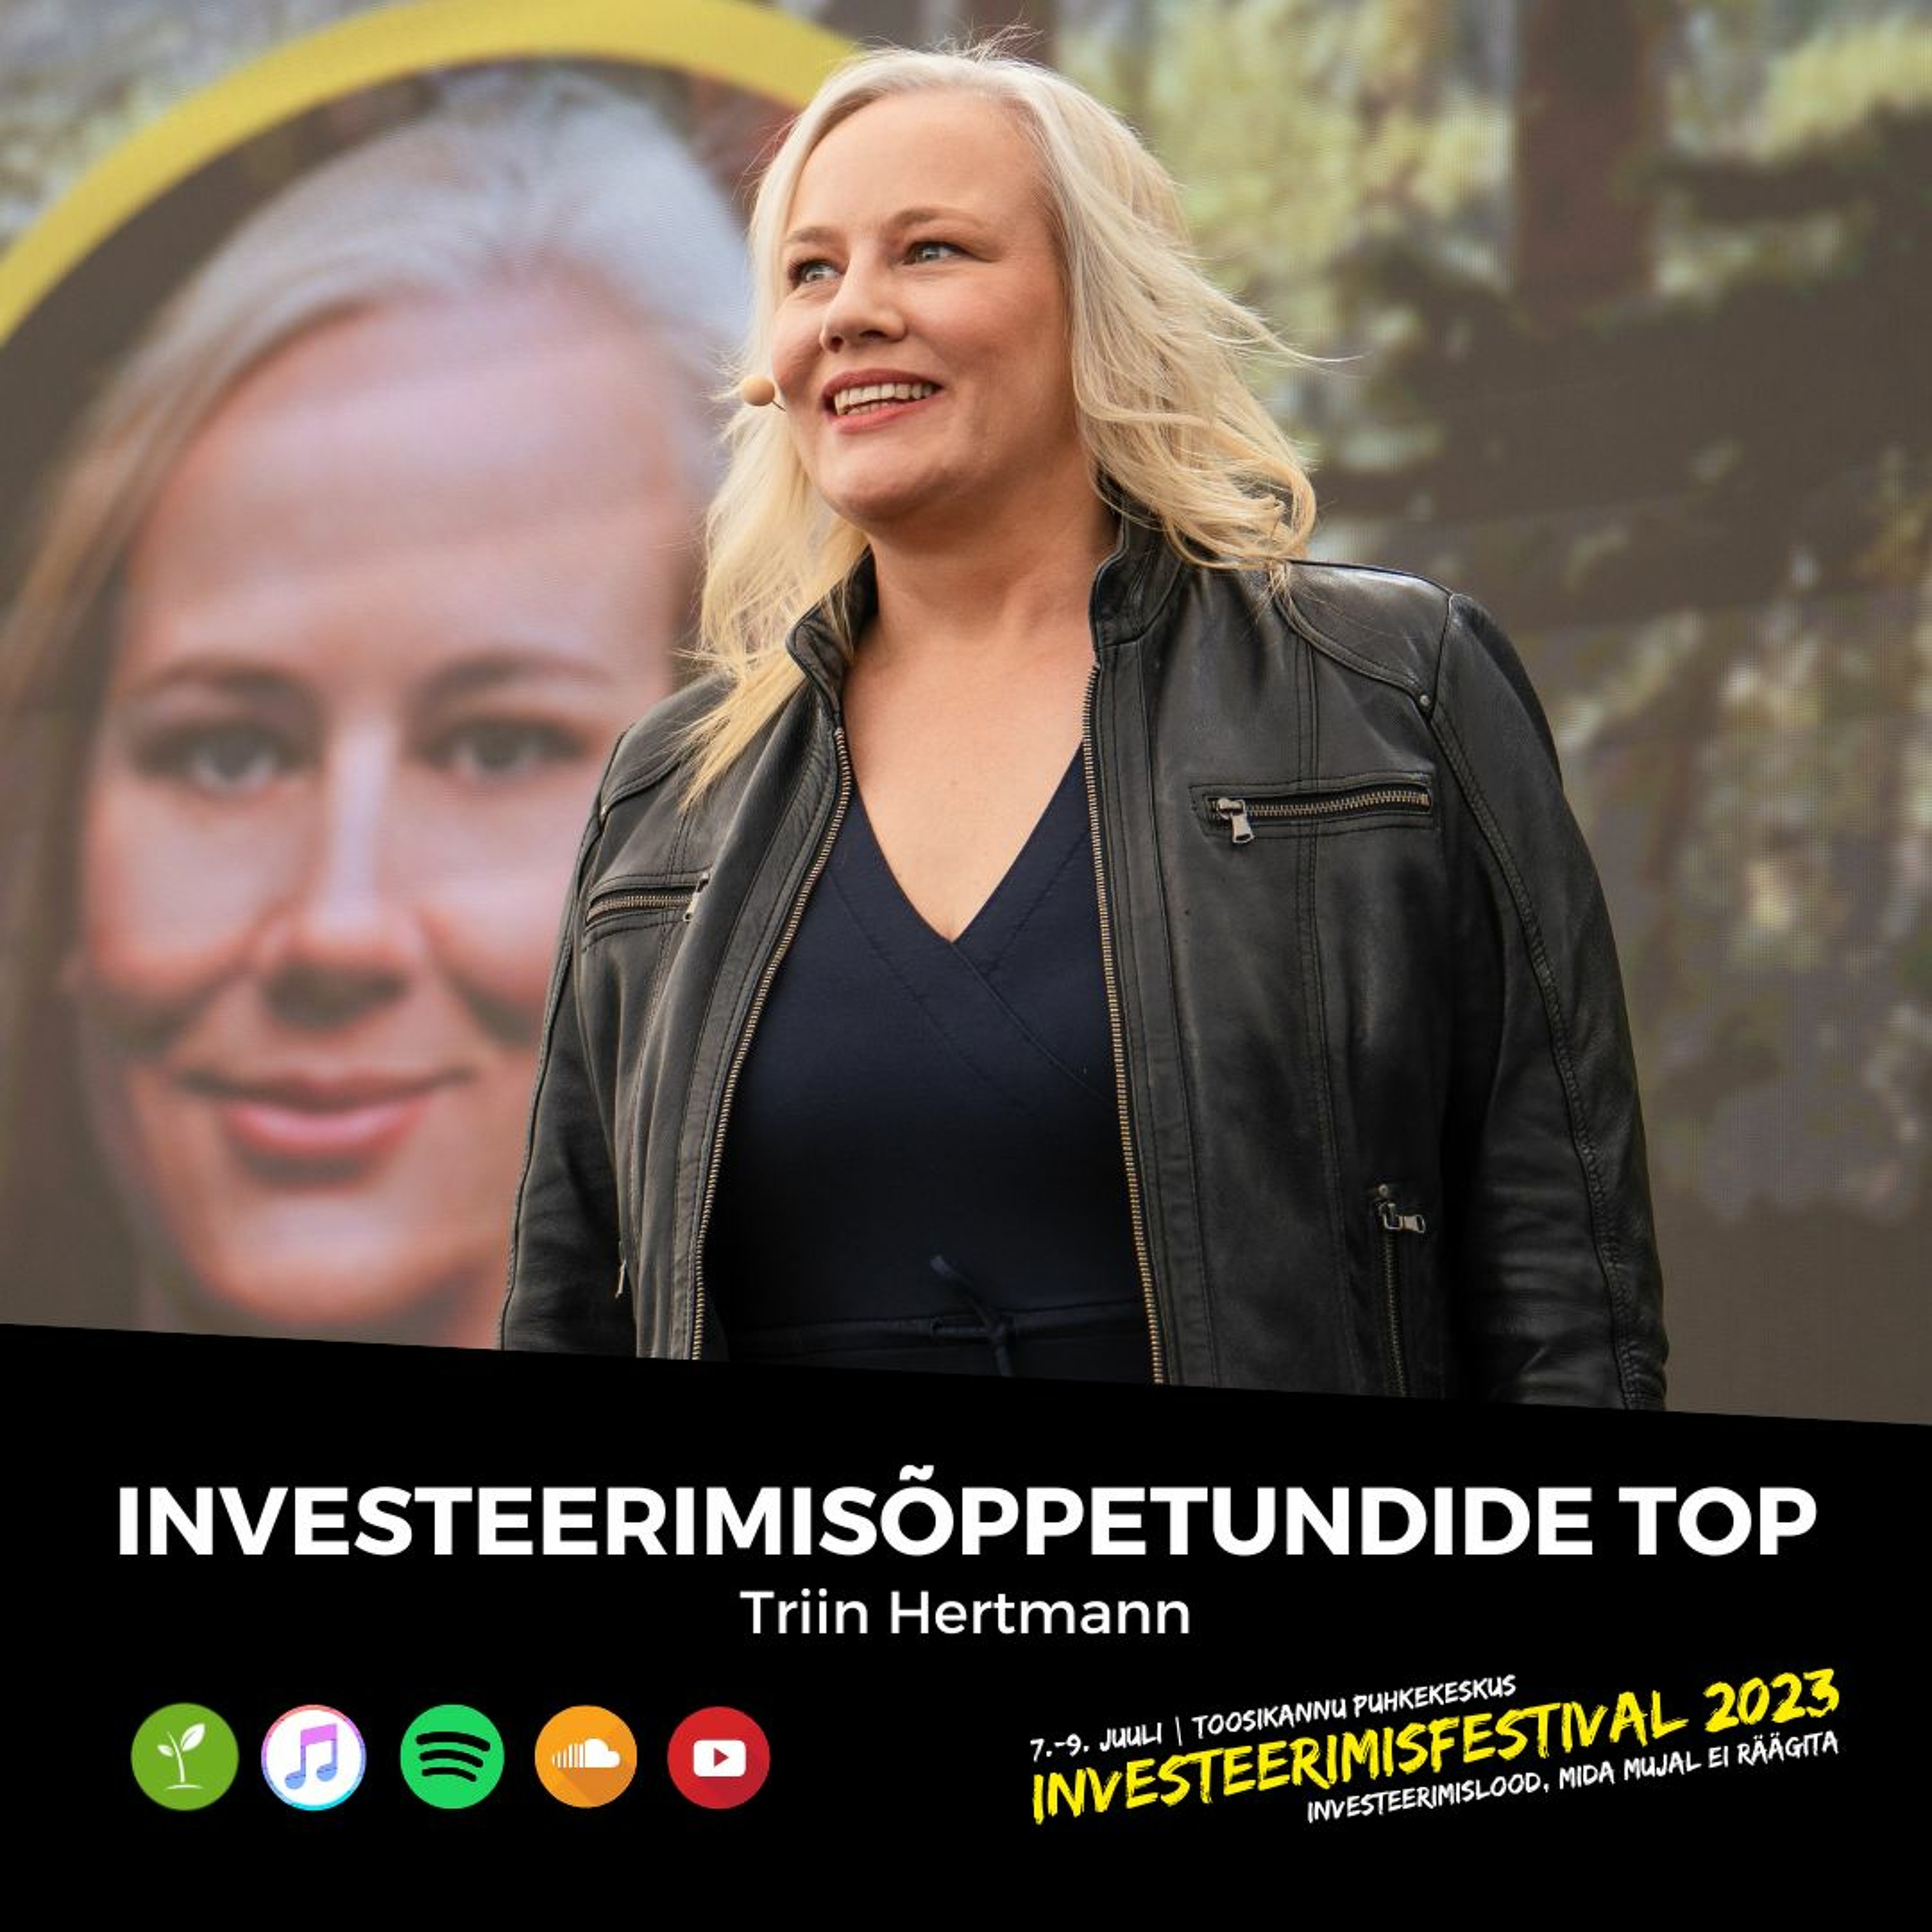 Investeerimisõppetundide TOP - Triin Hertmann